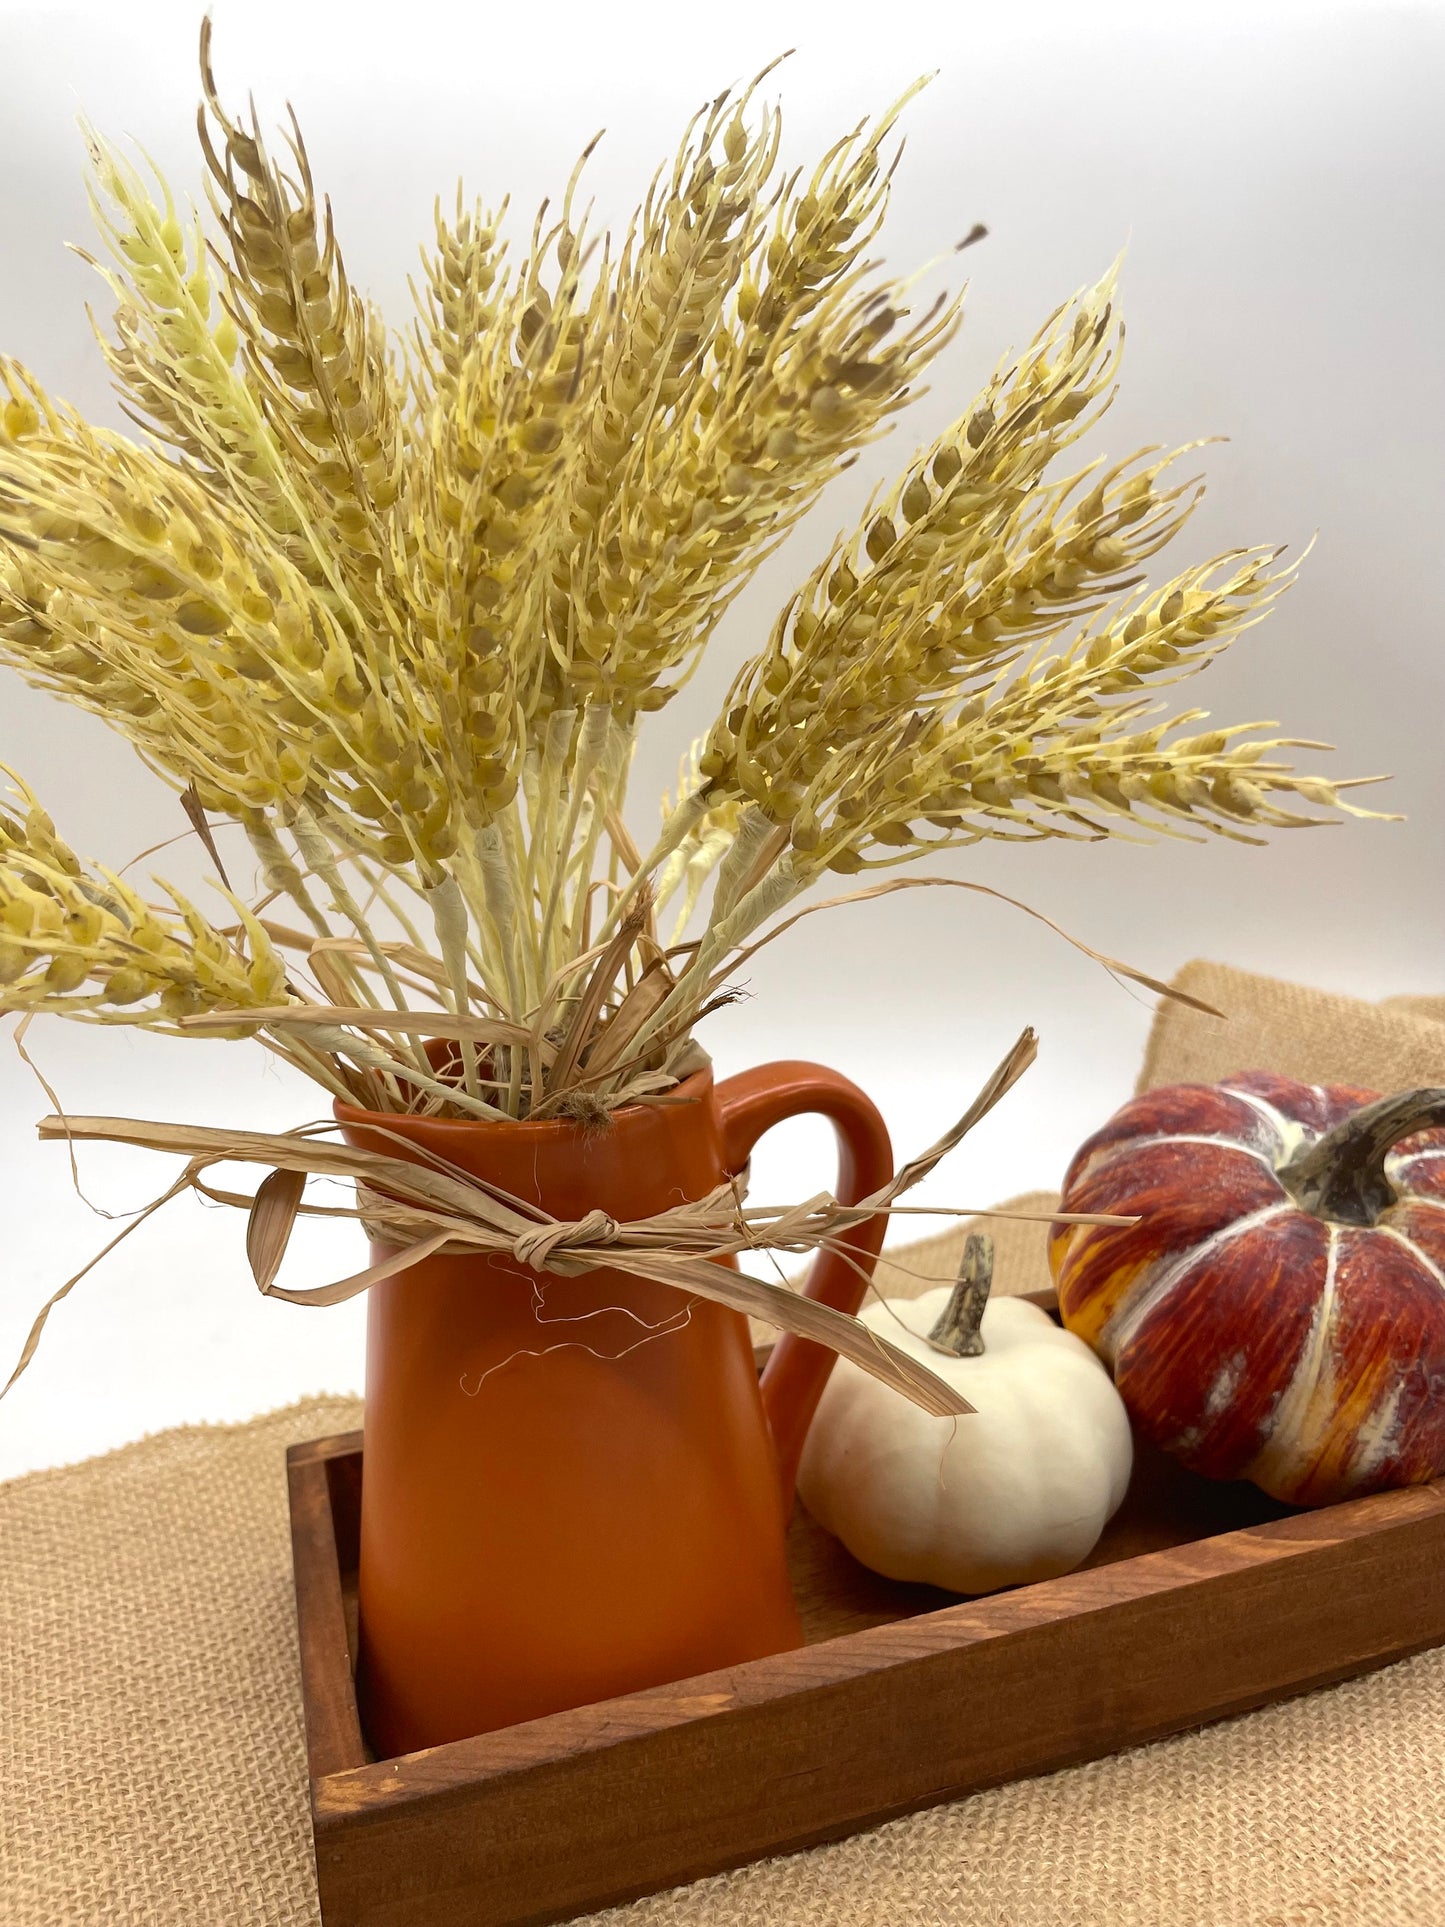 Wheat Arrangement Tray Set, Fall Themed Decorative Tray, Autumn Harvest Display